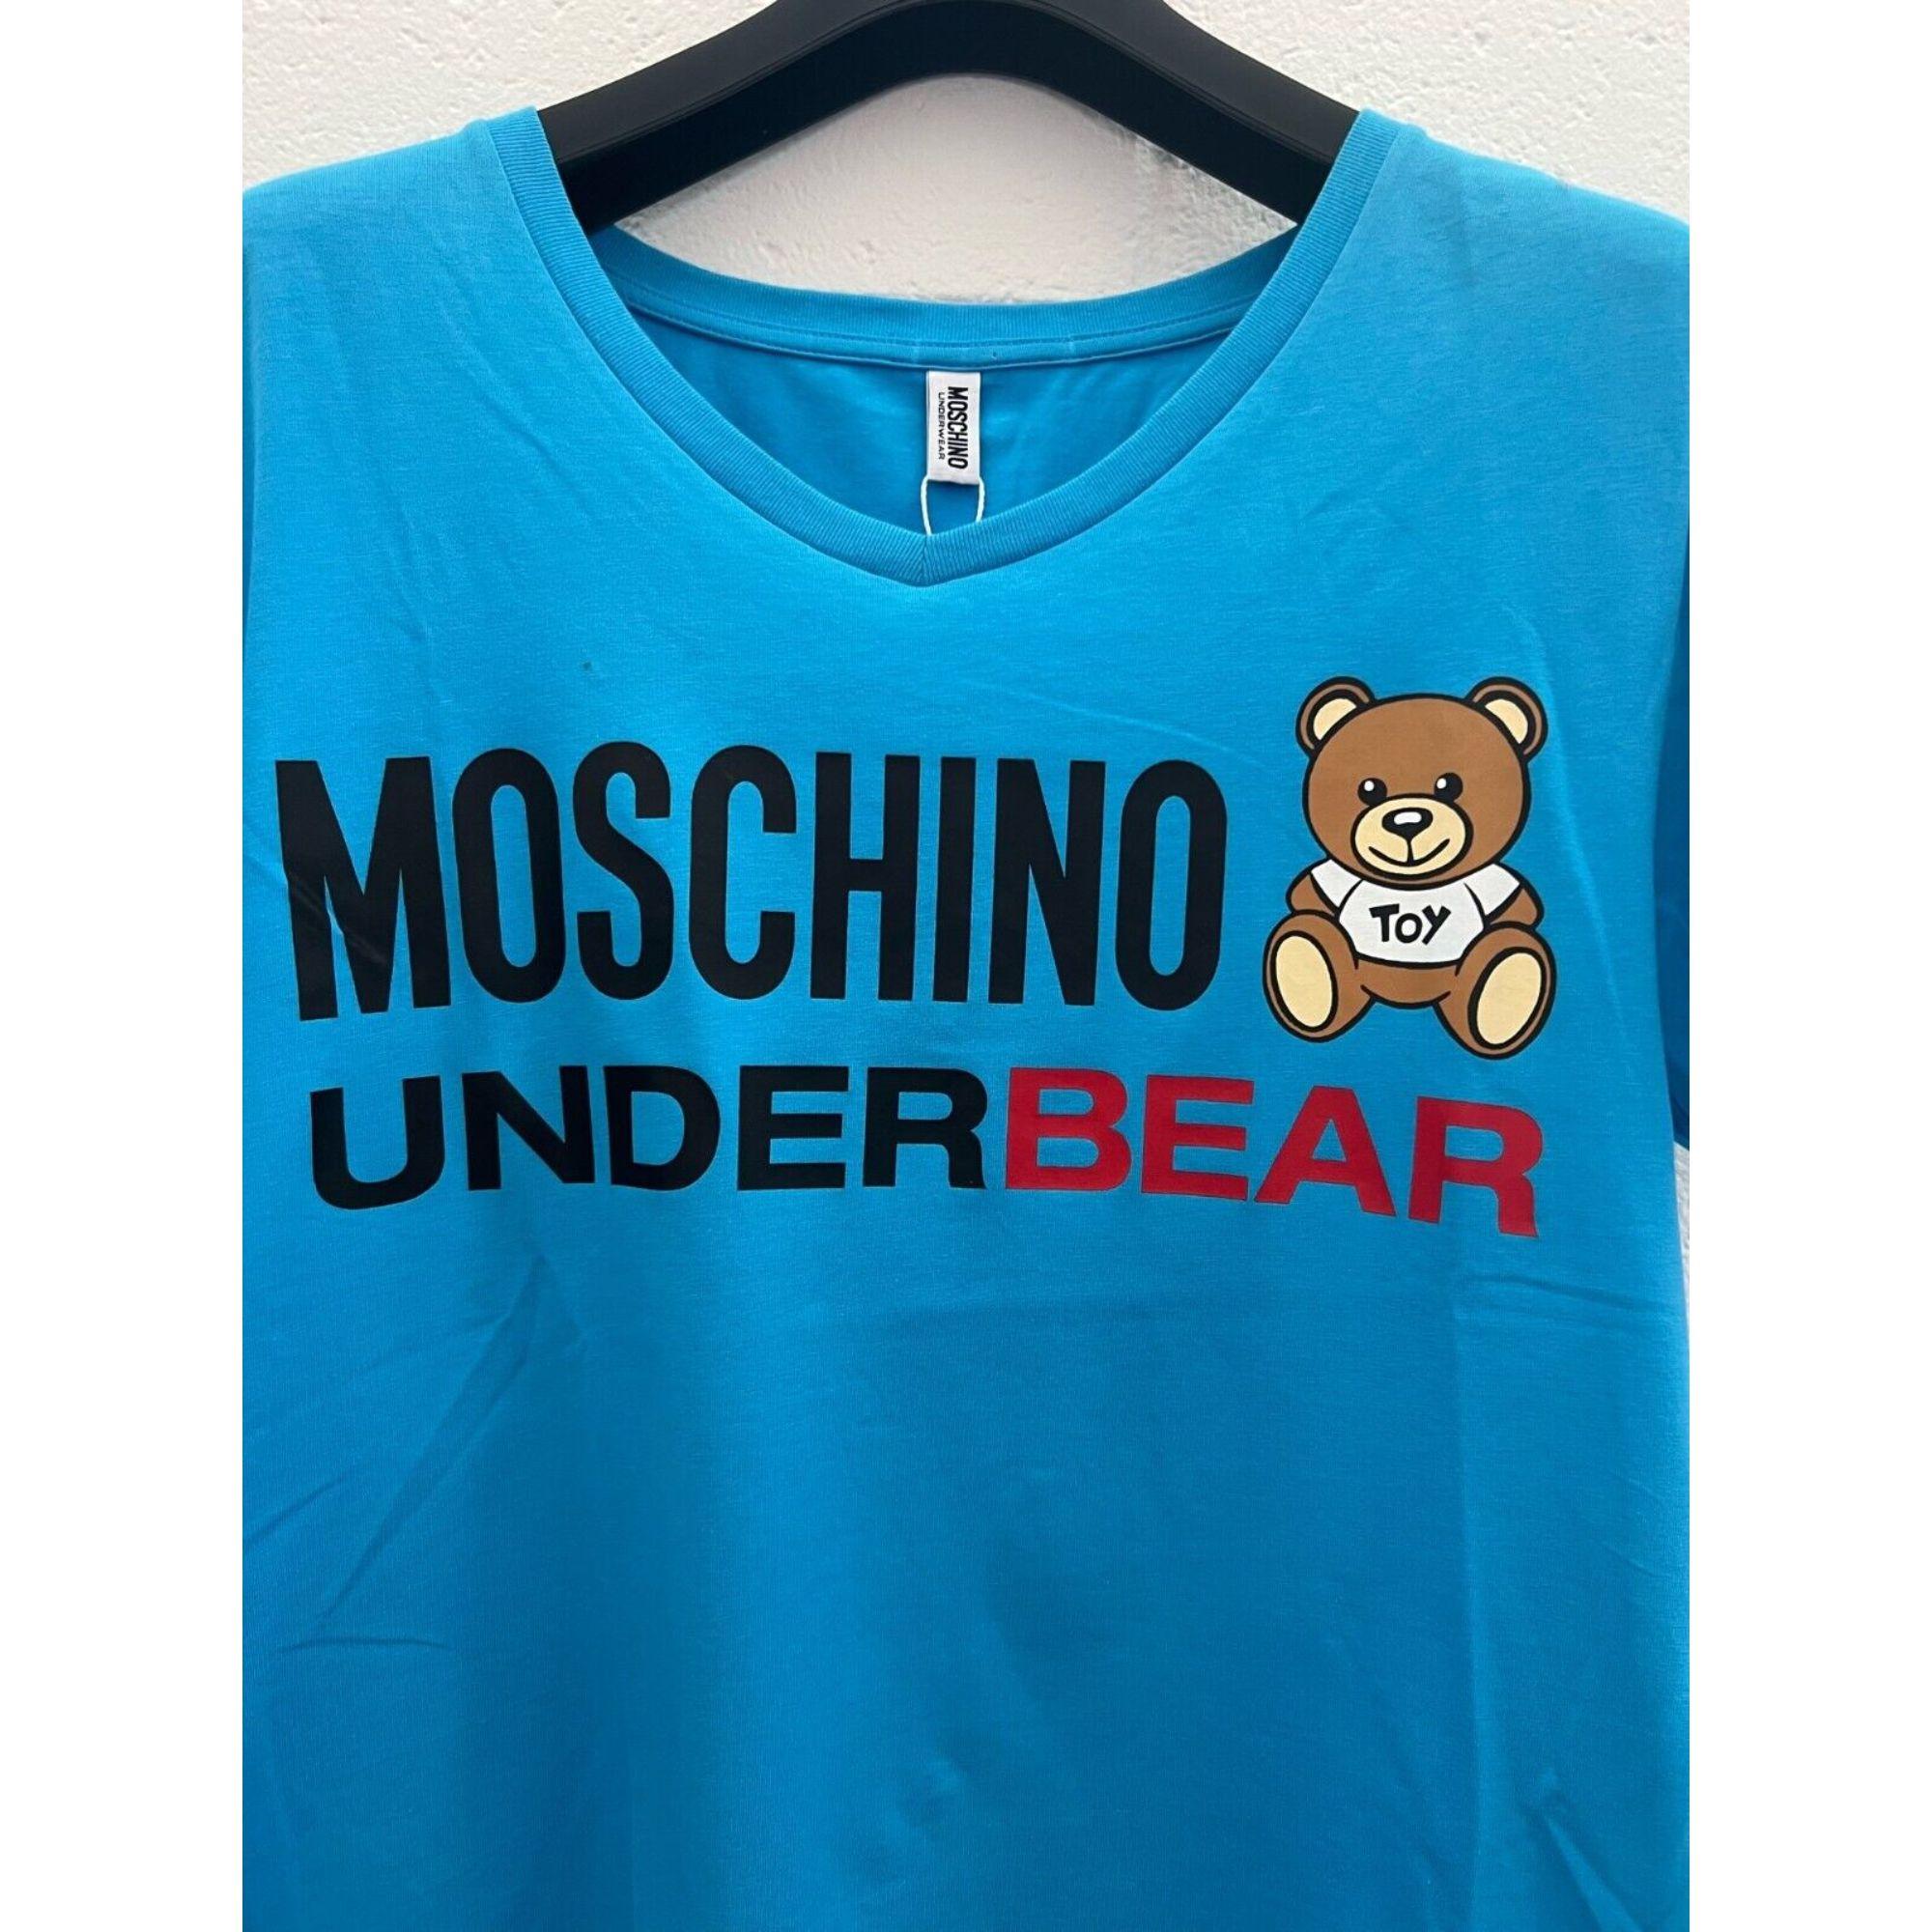 Gray SS20 Moschino Underwear Underbear Teddy Bear T-shirt by Jeremy Scott, Size XL For Sale